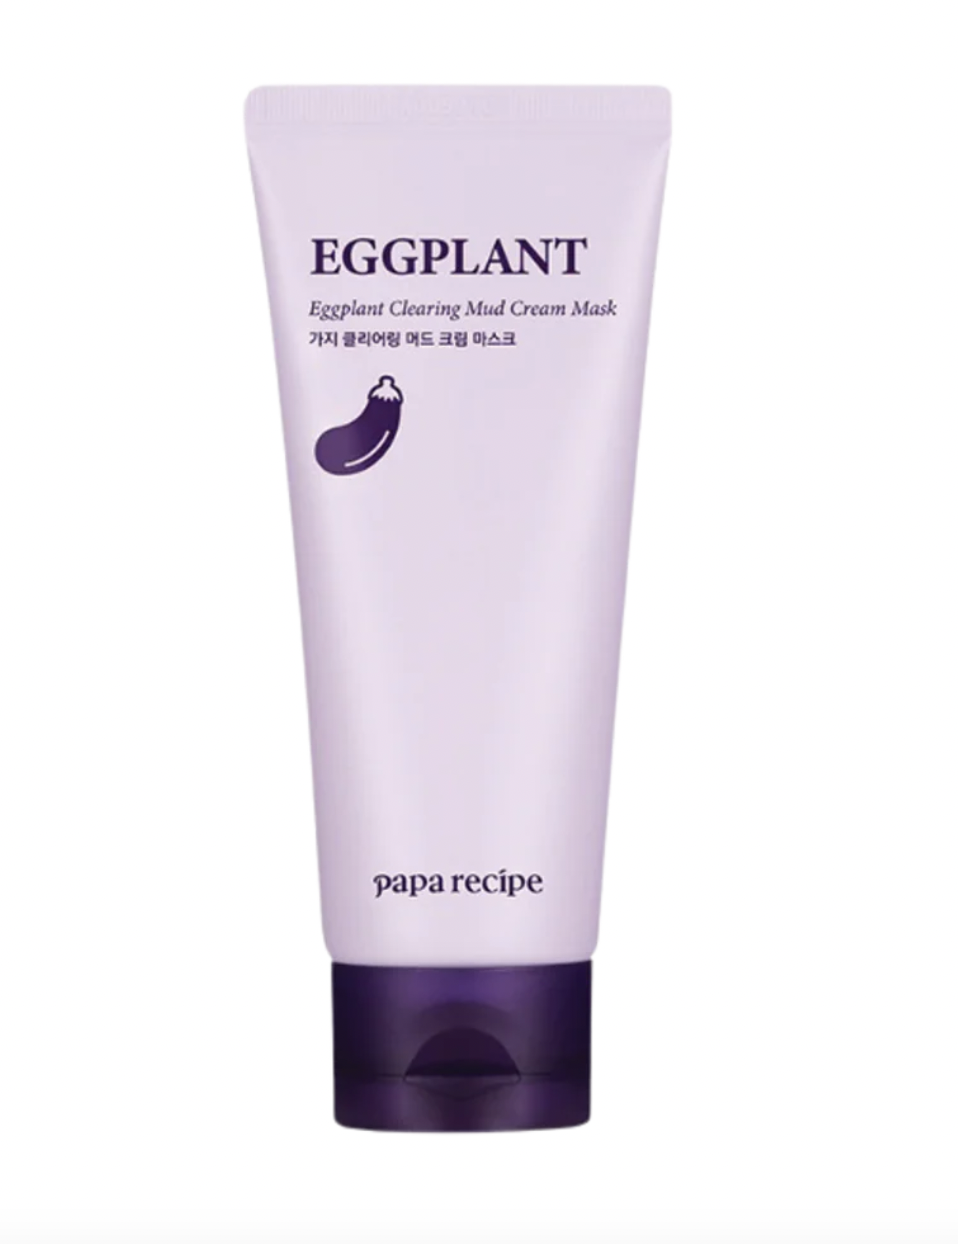 Papa Recipe Eggplant Clearing Mud Cream Mask